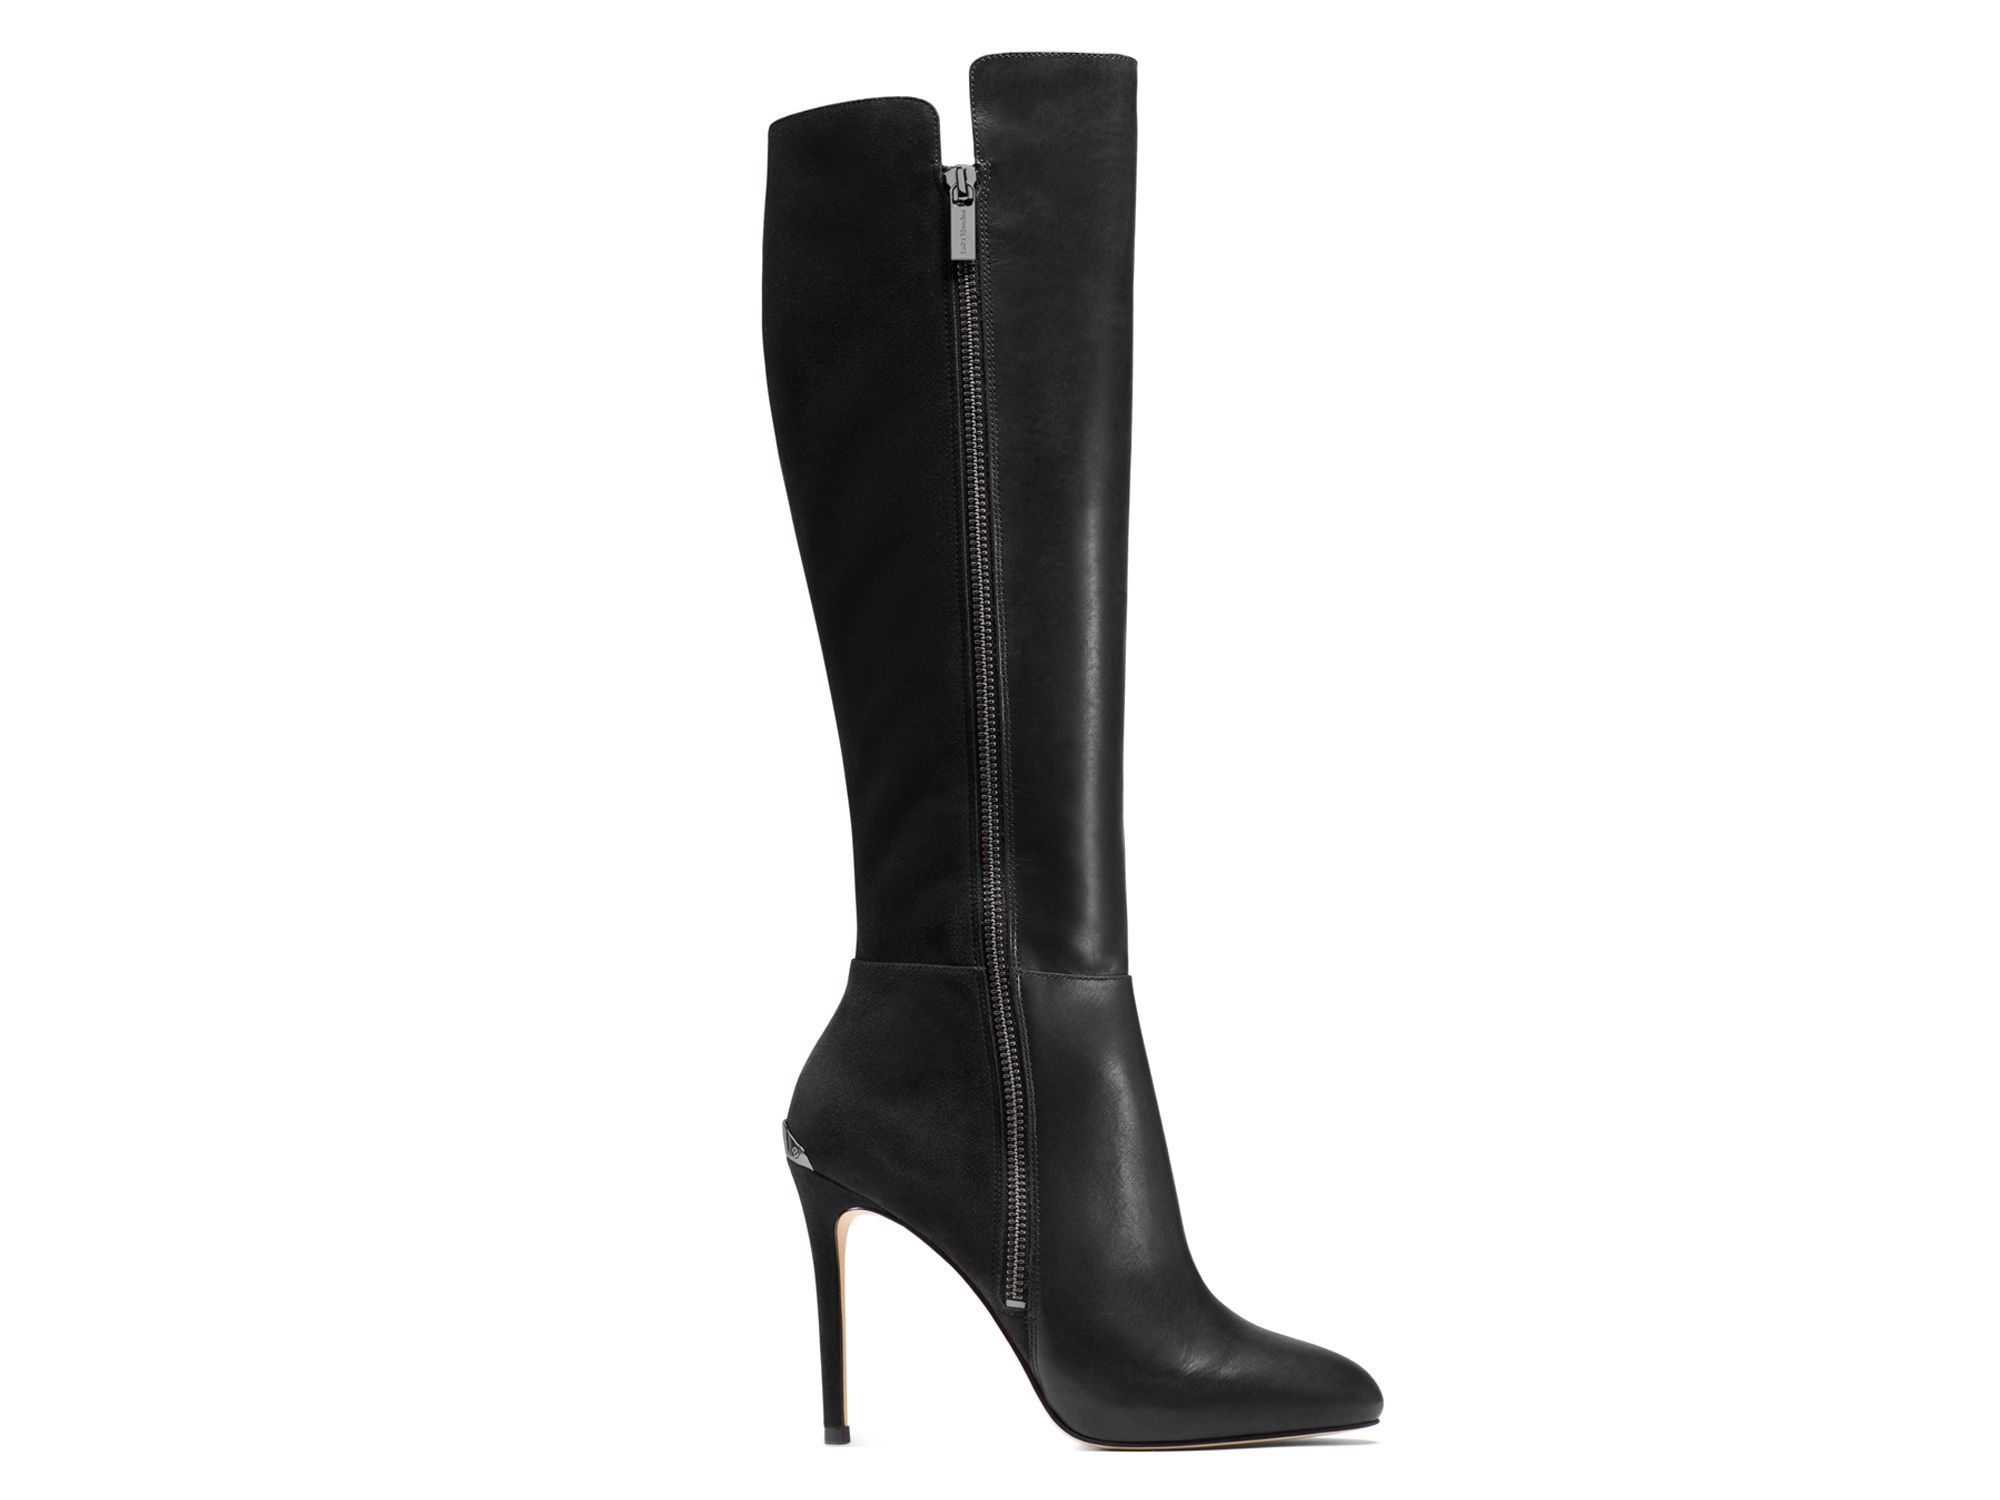 Lyst - Michael Michael Kors Clara Tall High Heel Boots in Black